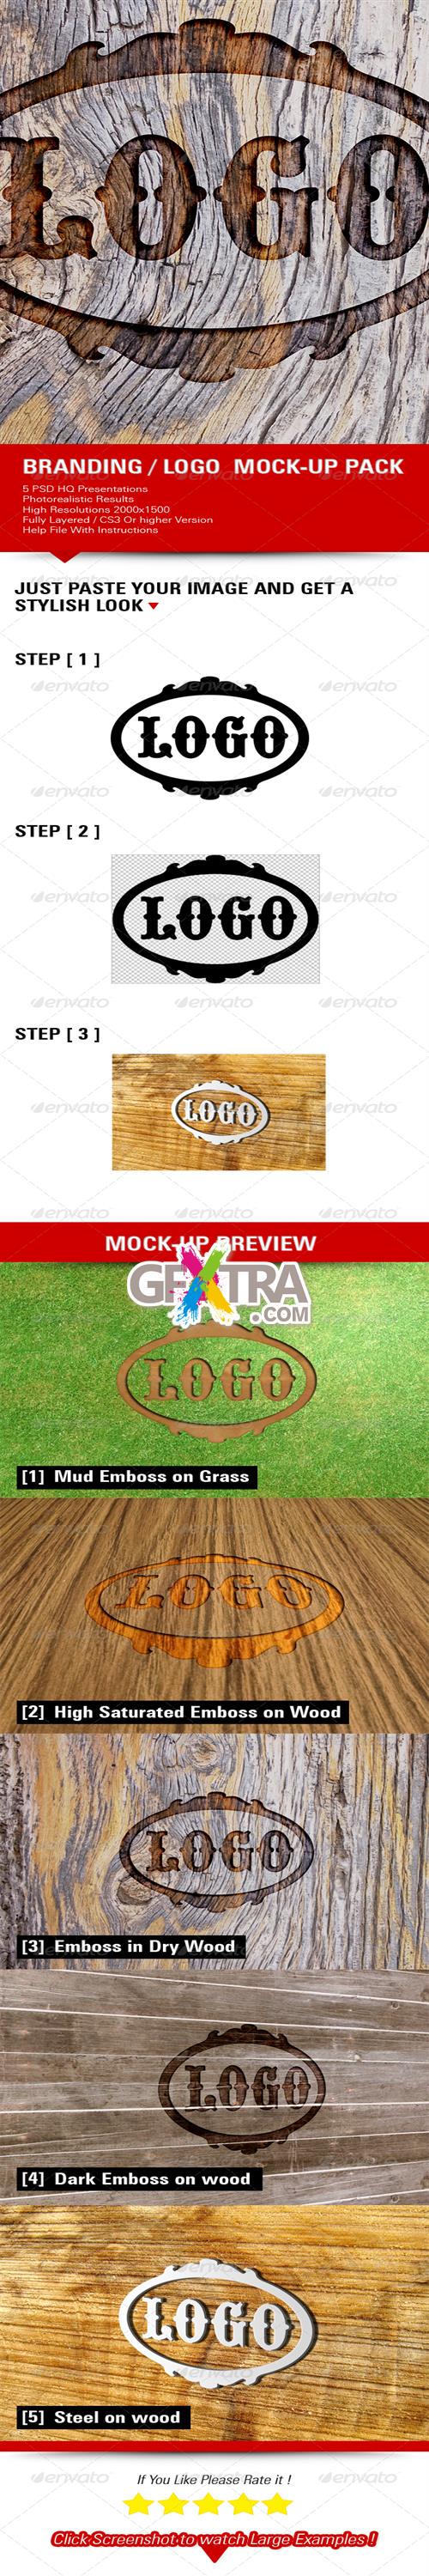 GraphicRiver - Branding / Logo Mock-Up Pack